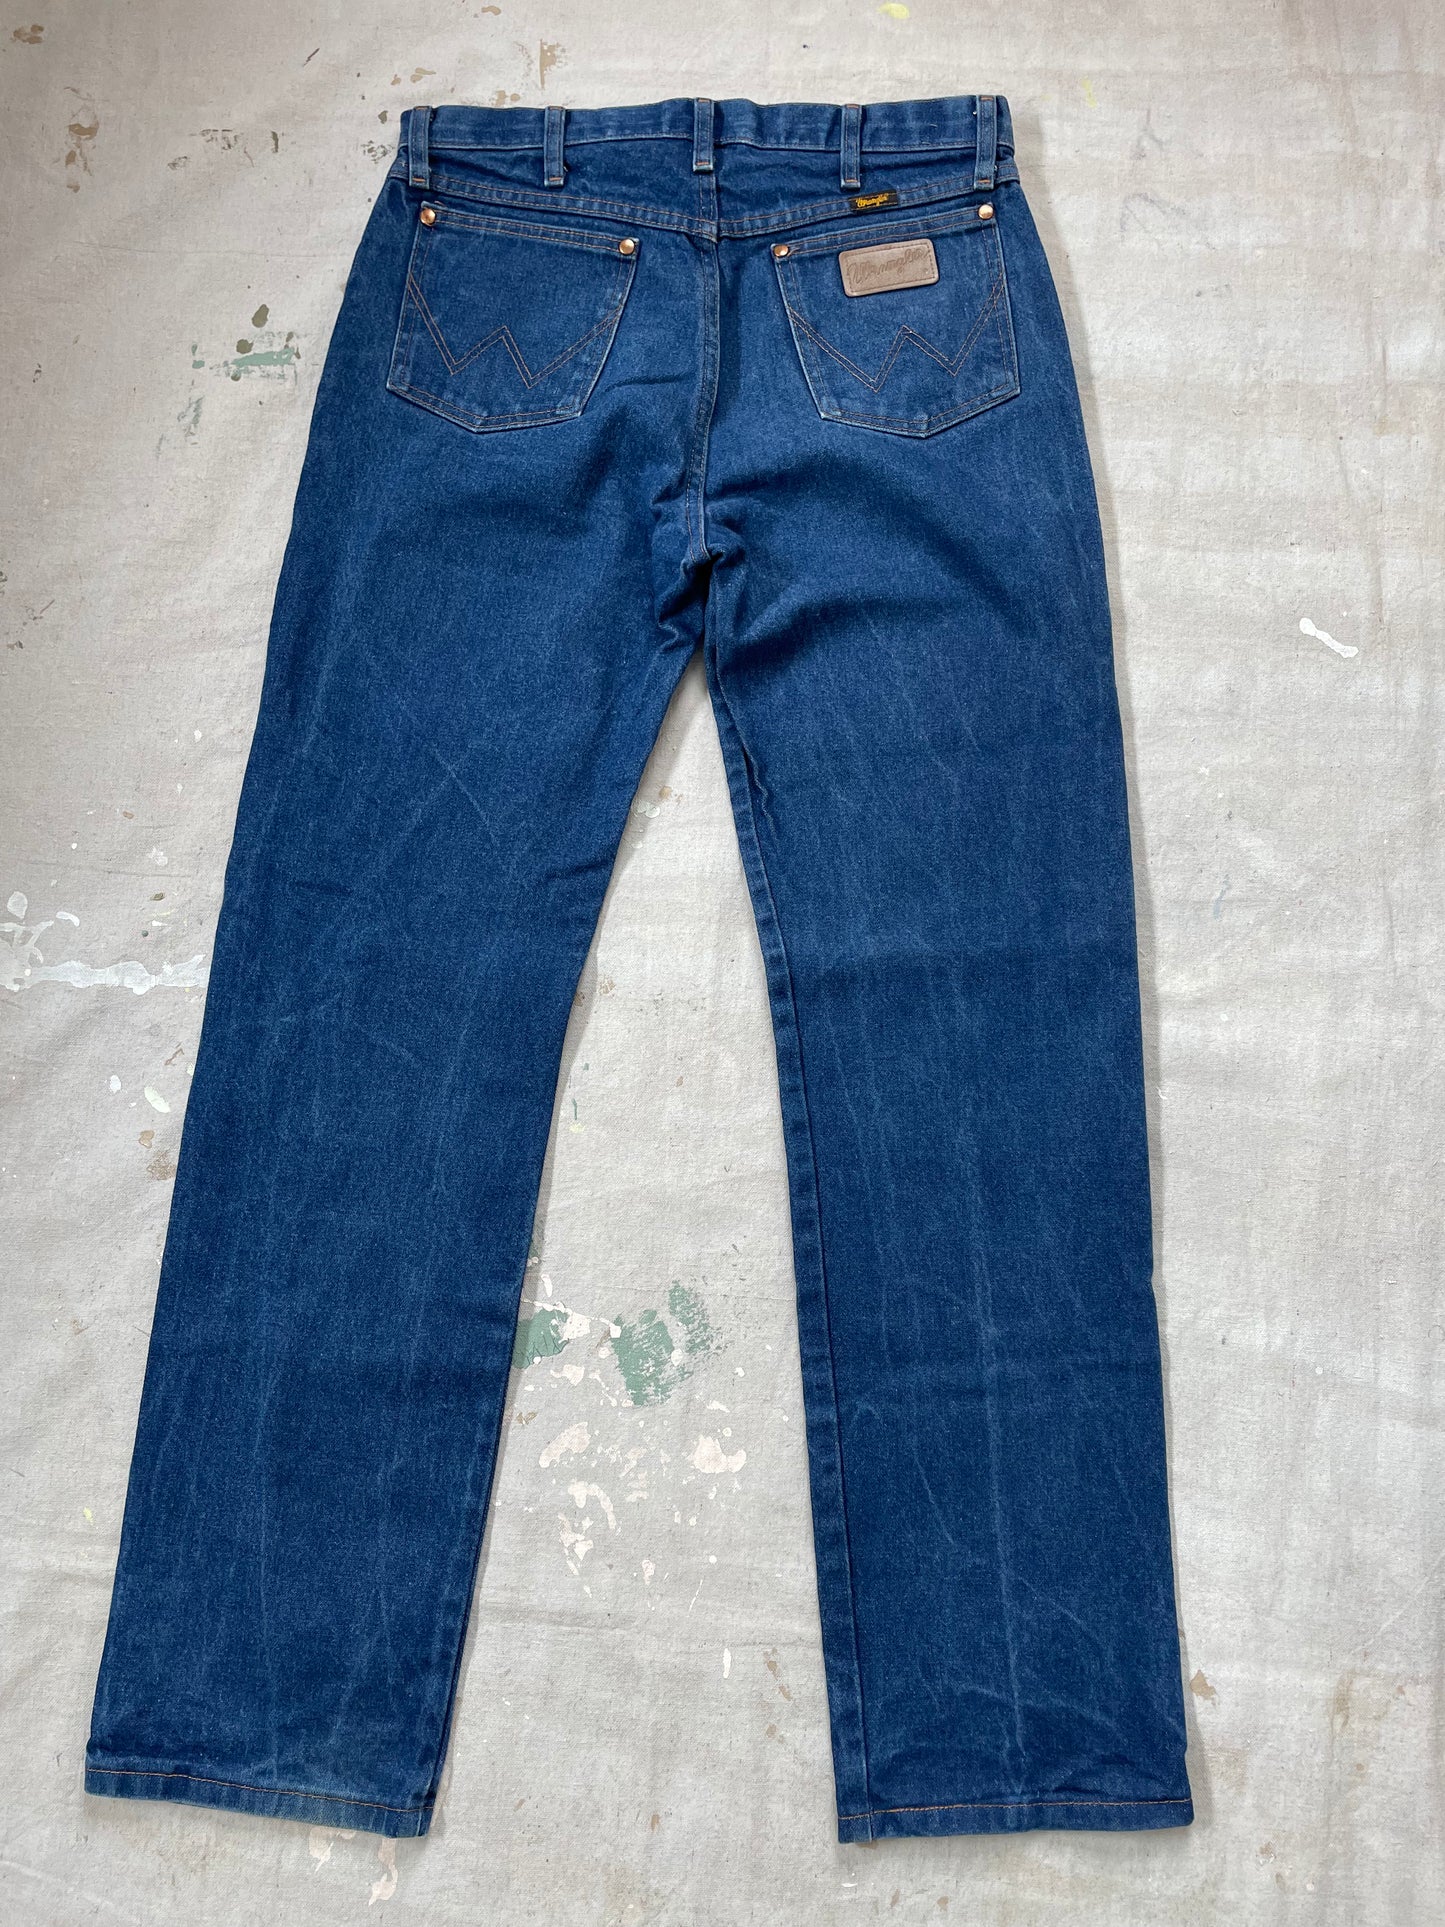 90s Wrangler Jeans 13MWZ